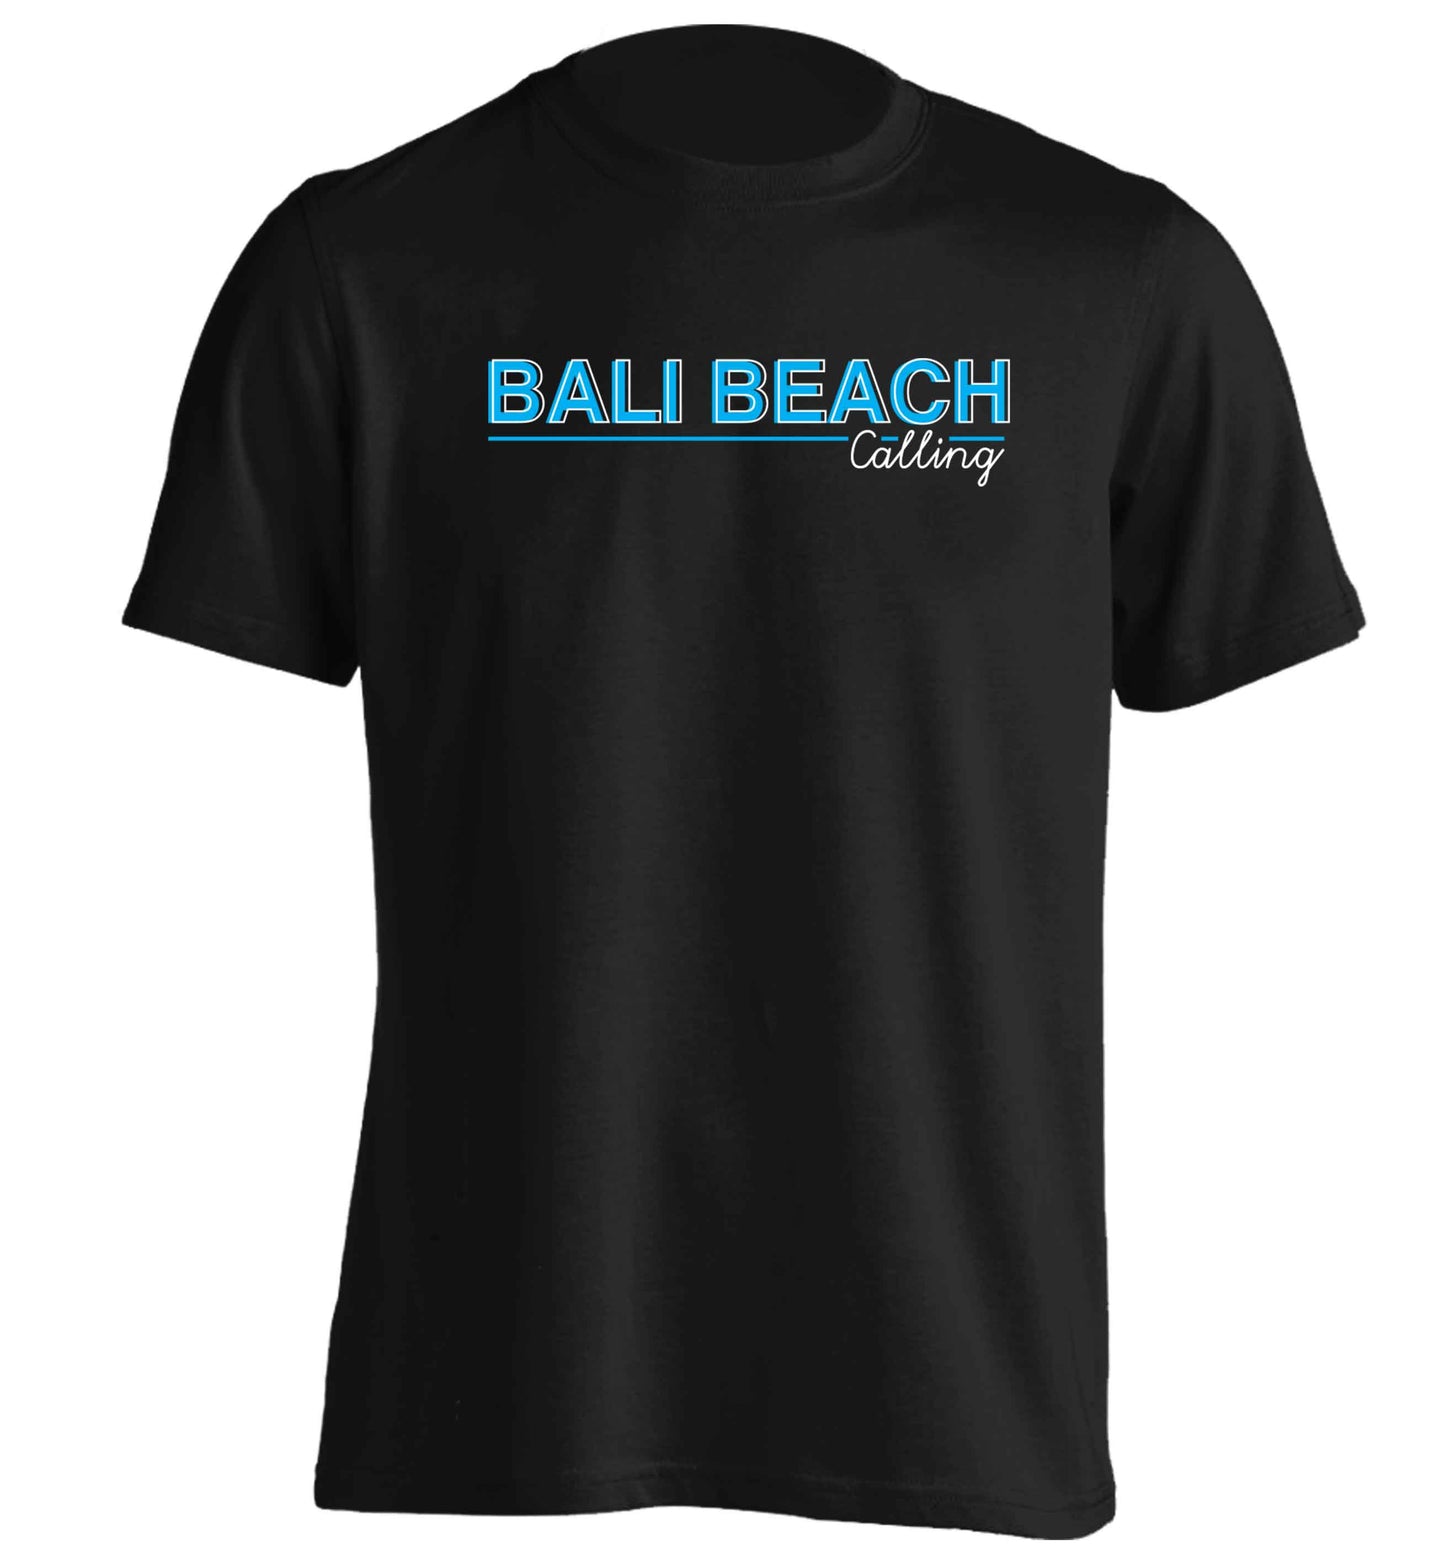 Bali beach calling adults unisex black Tshirt 2XL